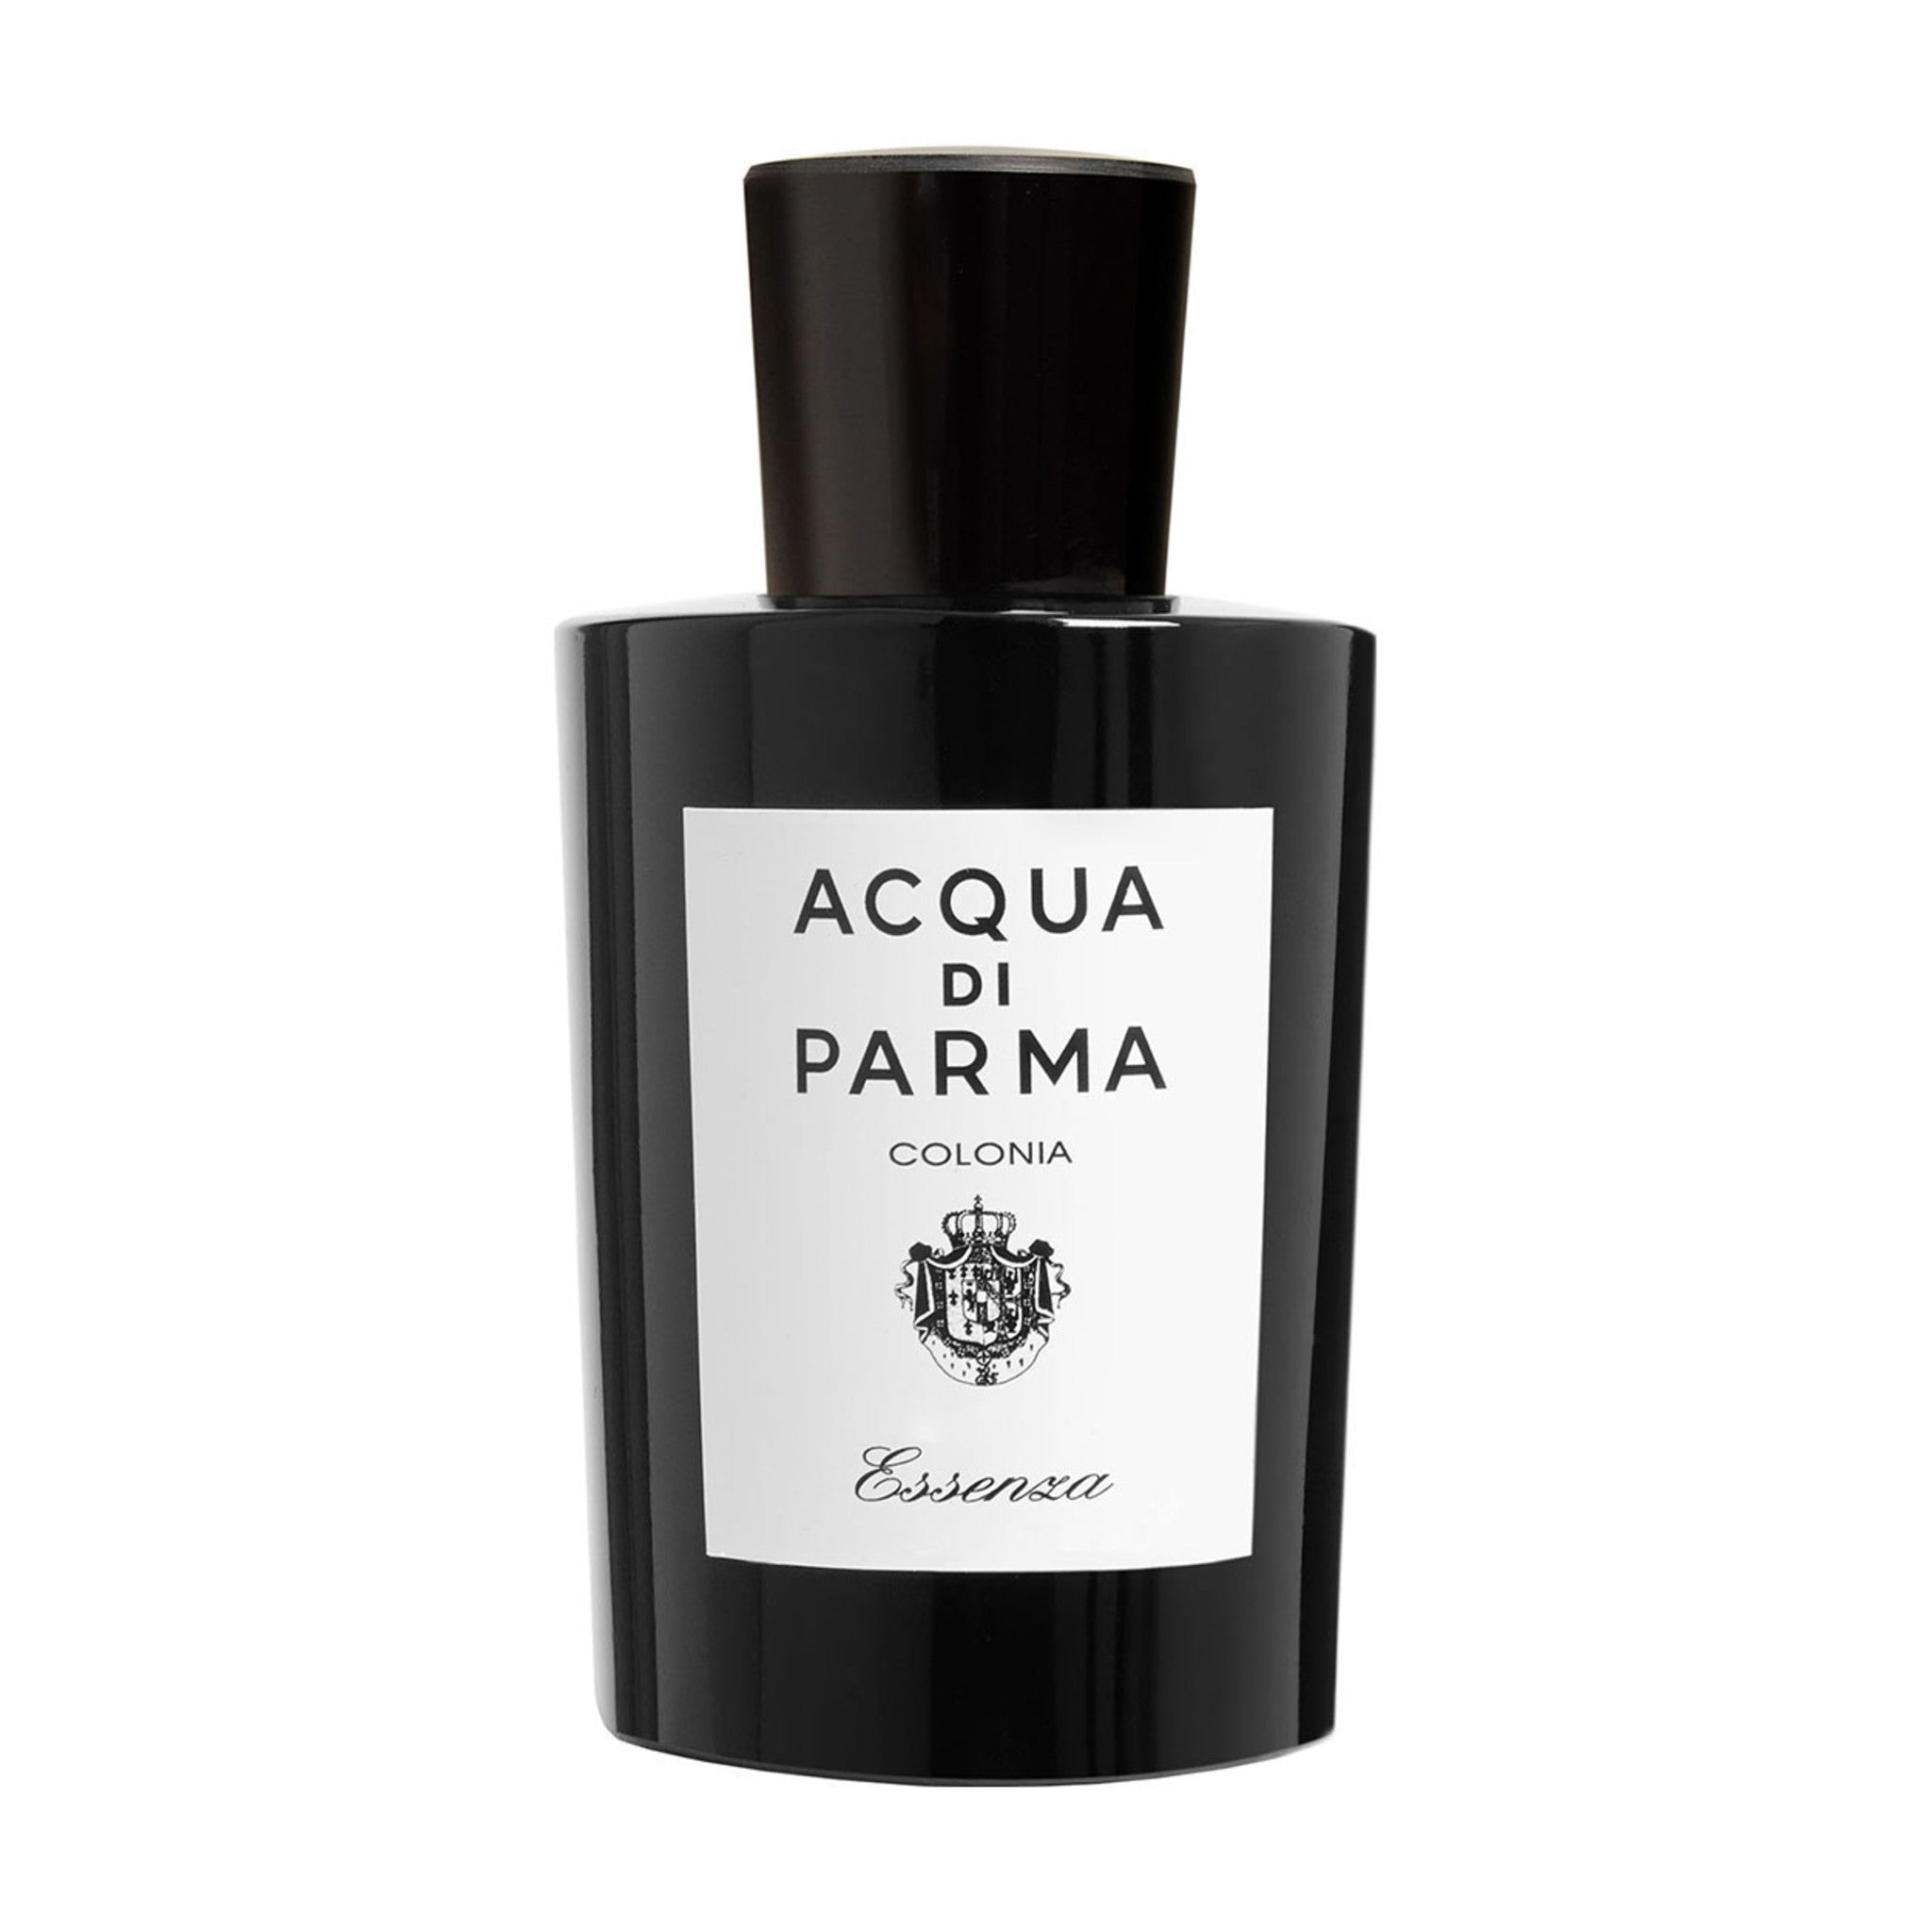 Acqua di Parma - Lily of The Valley Eau de Parfum 3.4 oz.